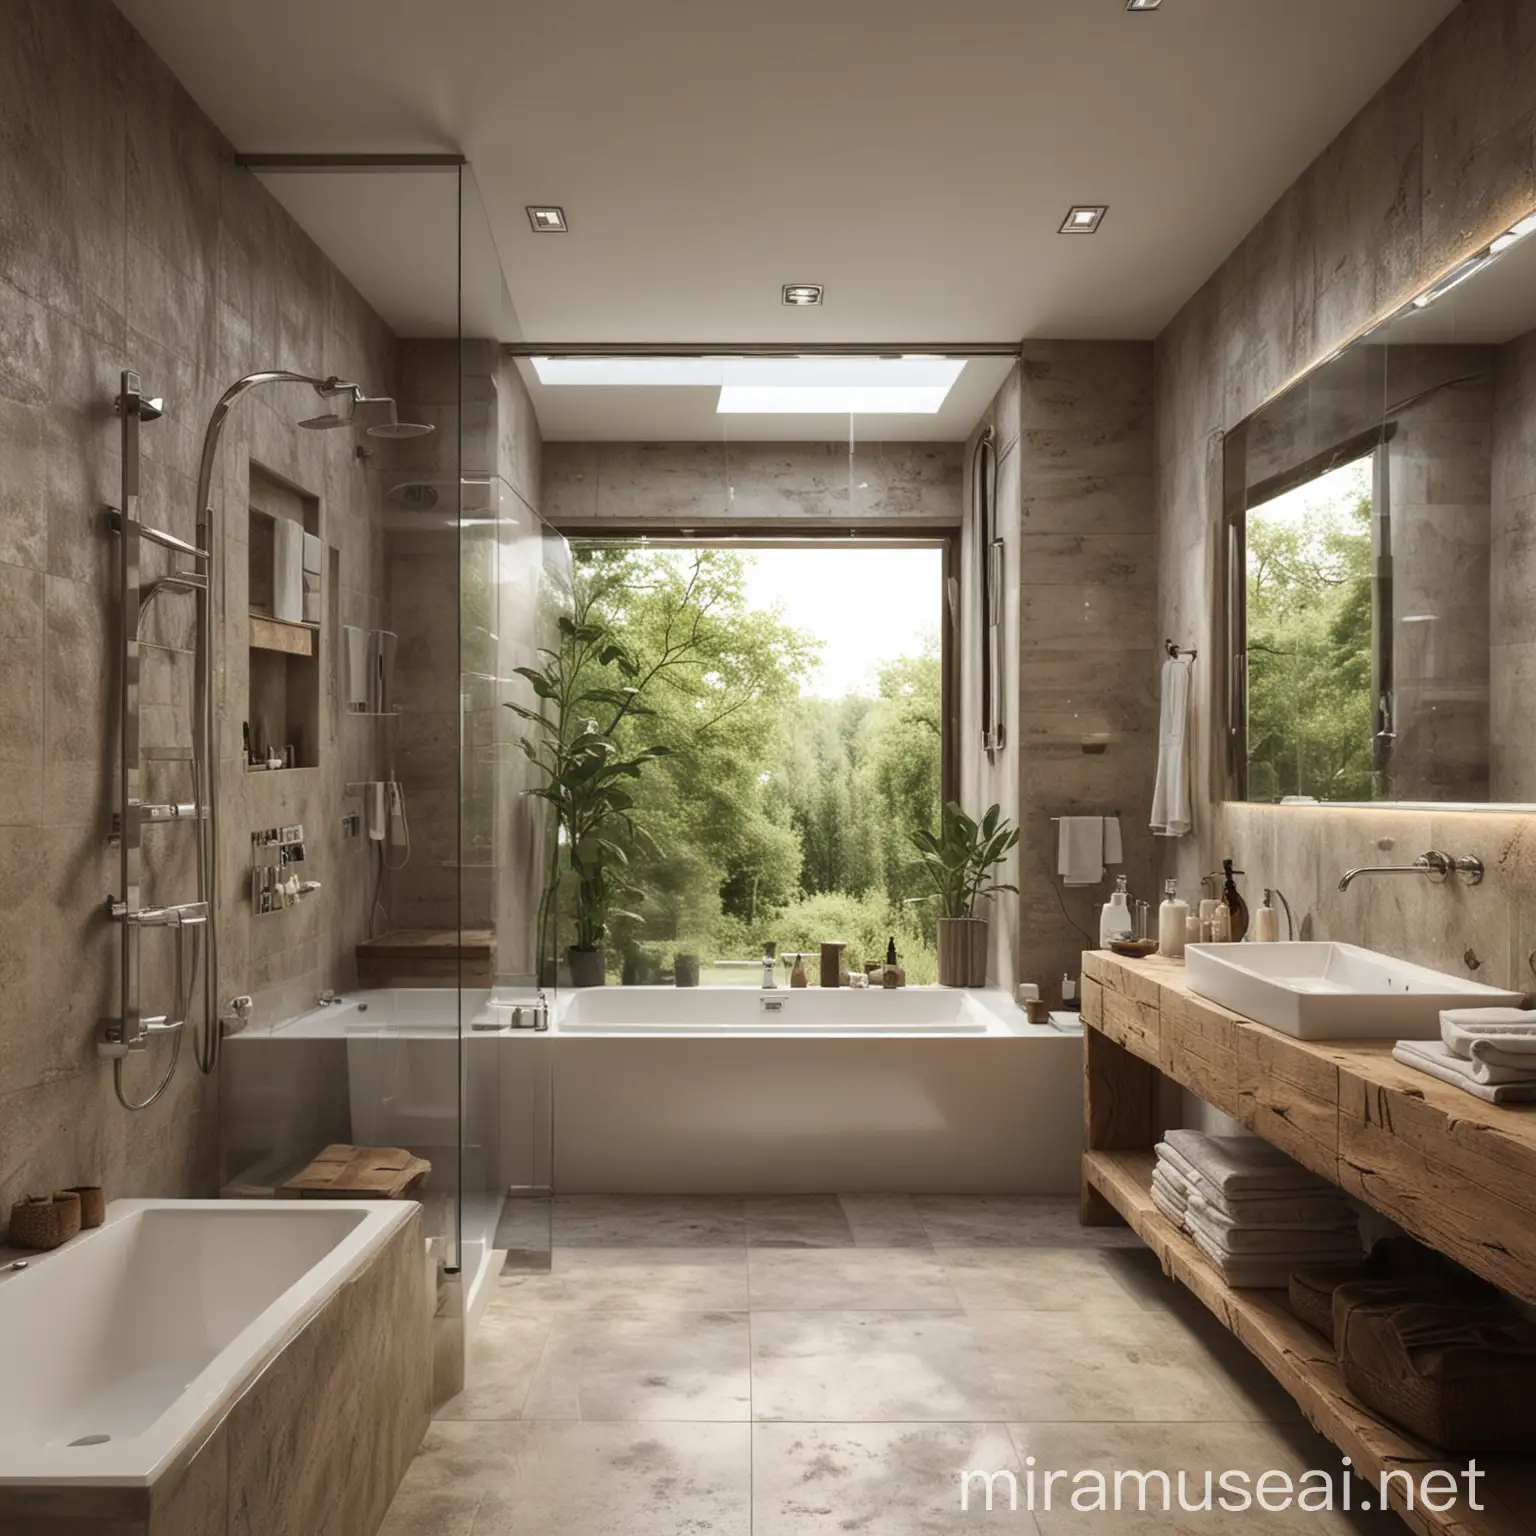 Modern Bathroom Interior with Contemporary Design Elements